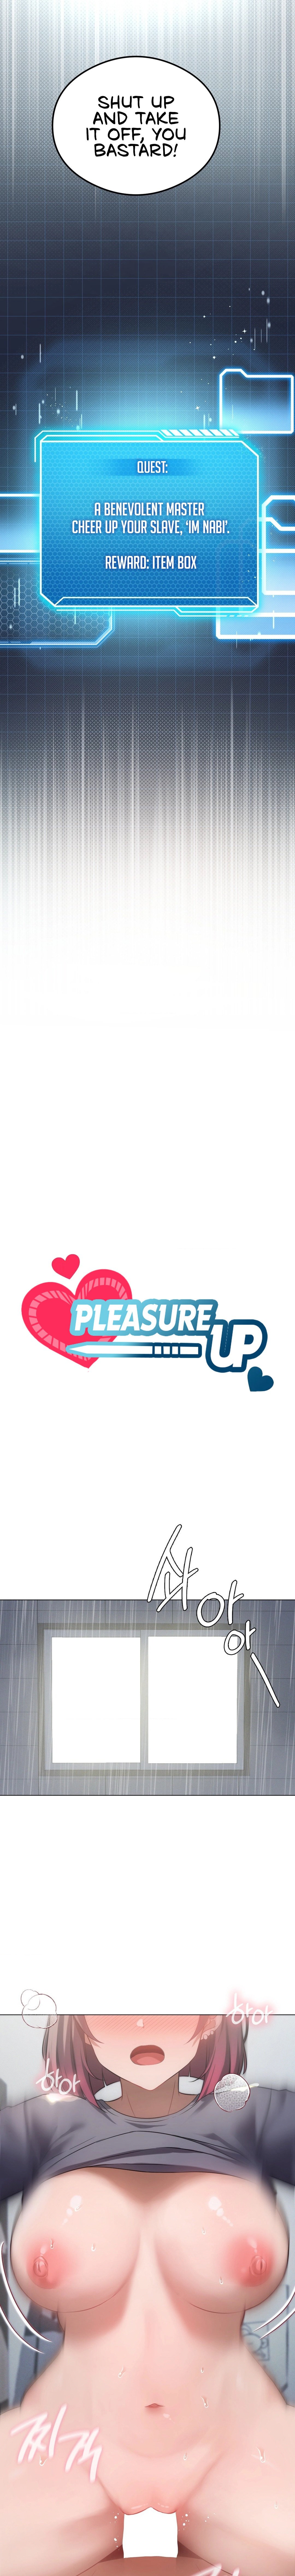 pleasure-up-chap-28-1